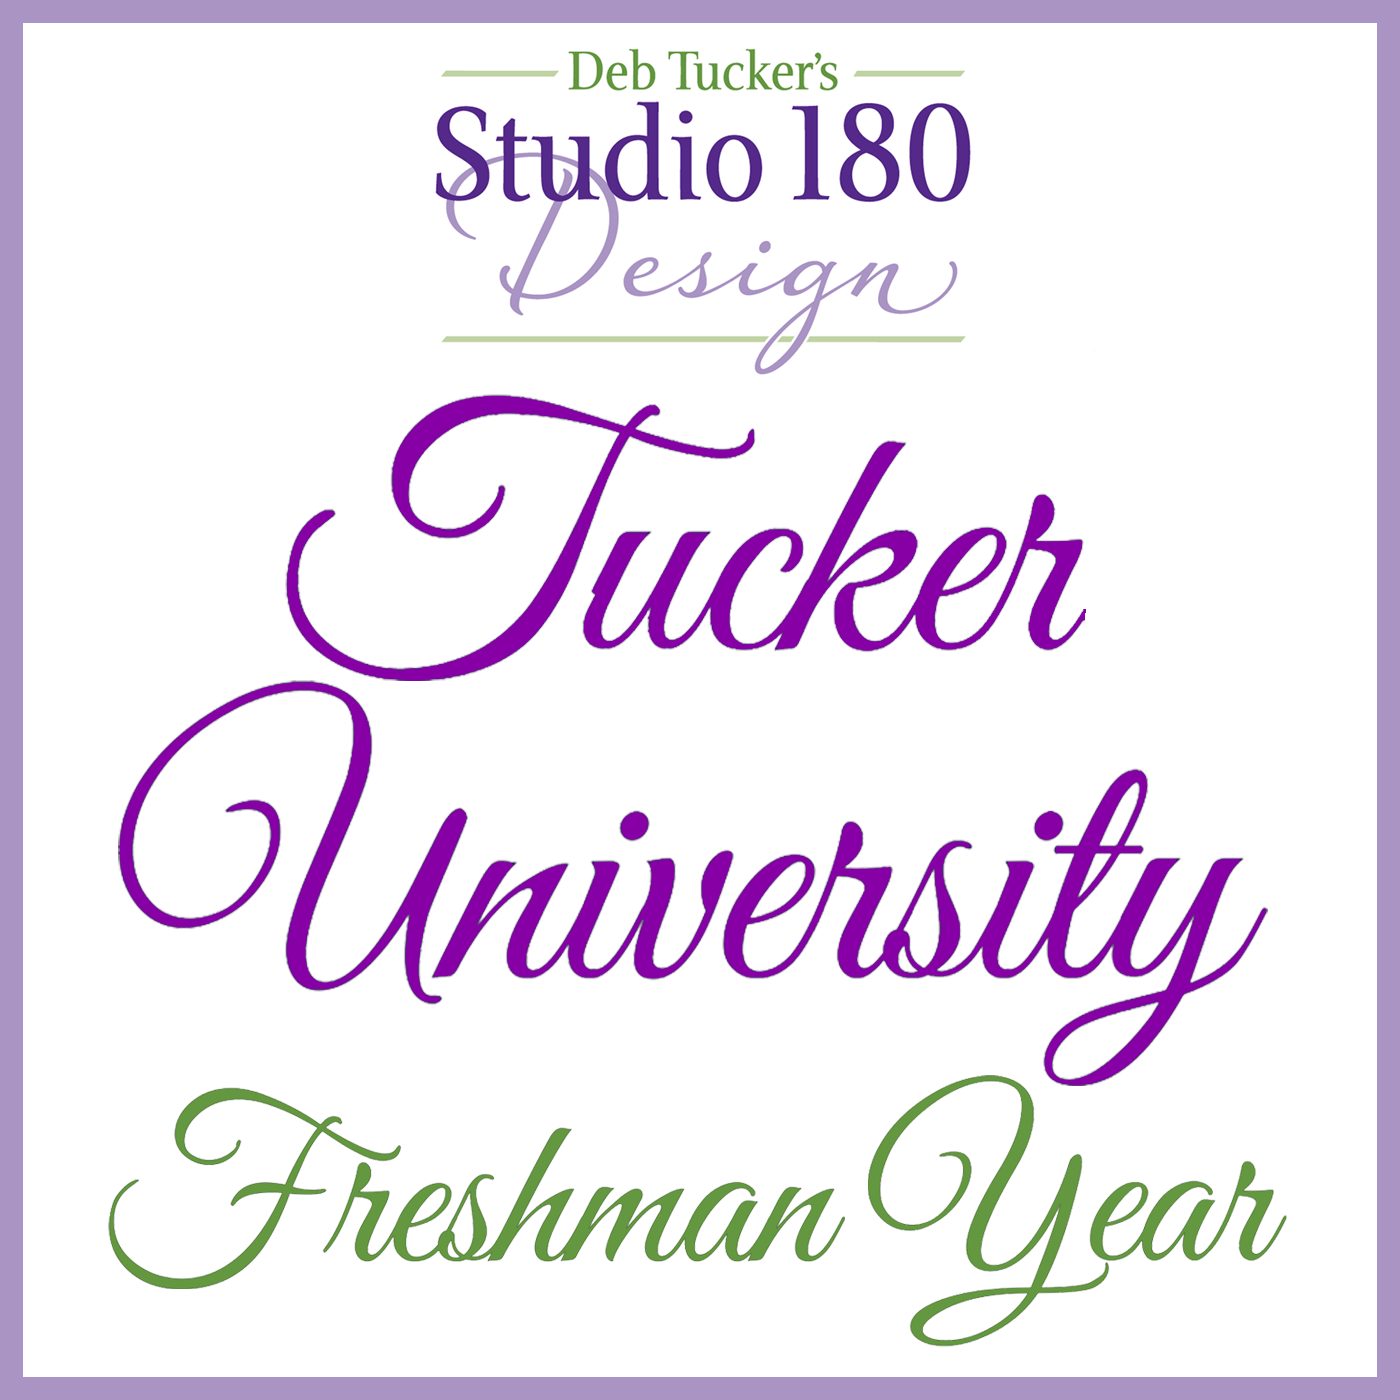 Studio 180 Design Tucker University - 12 Days Promotion